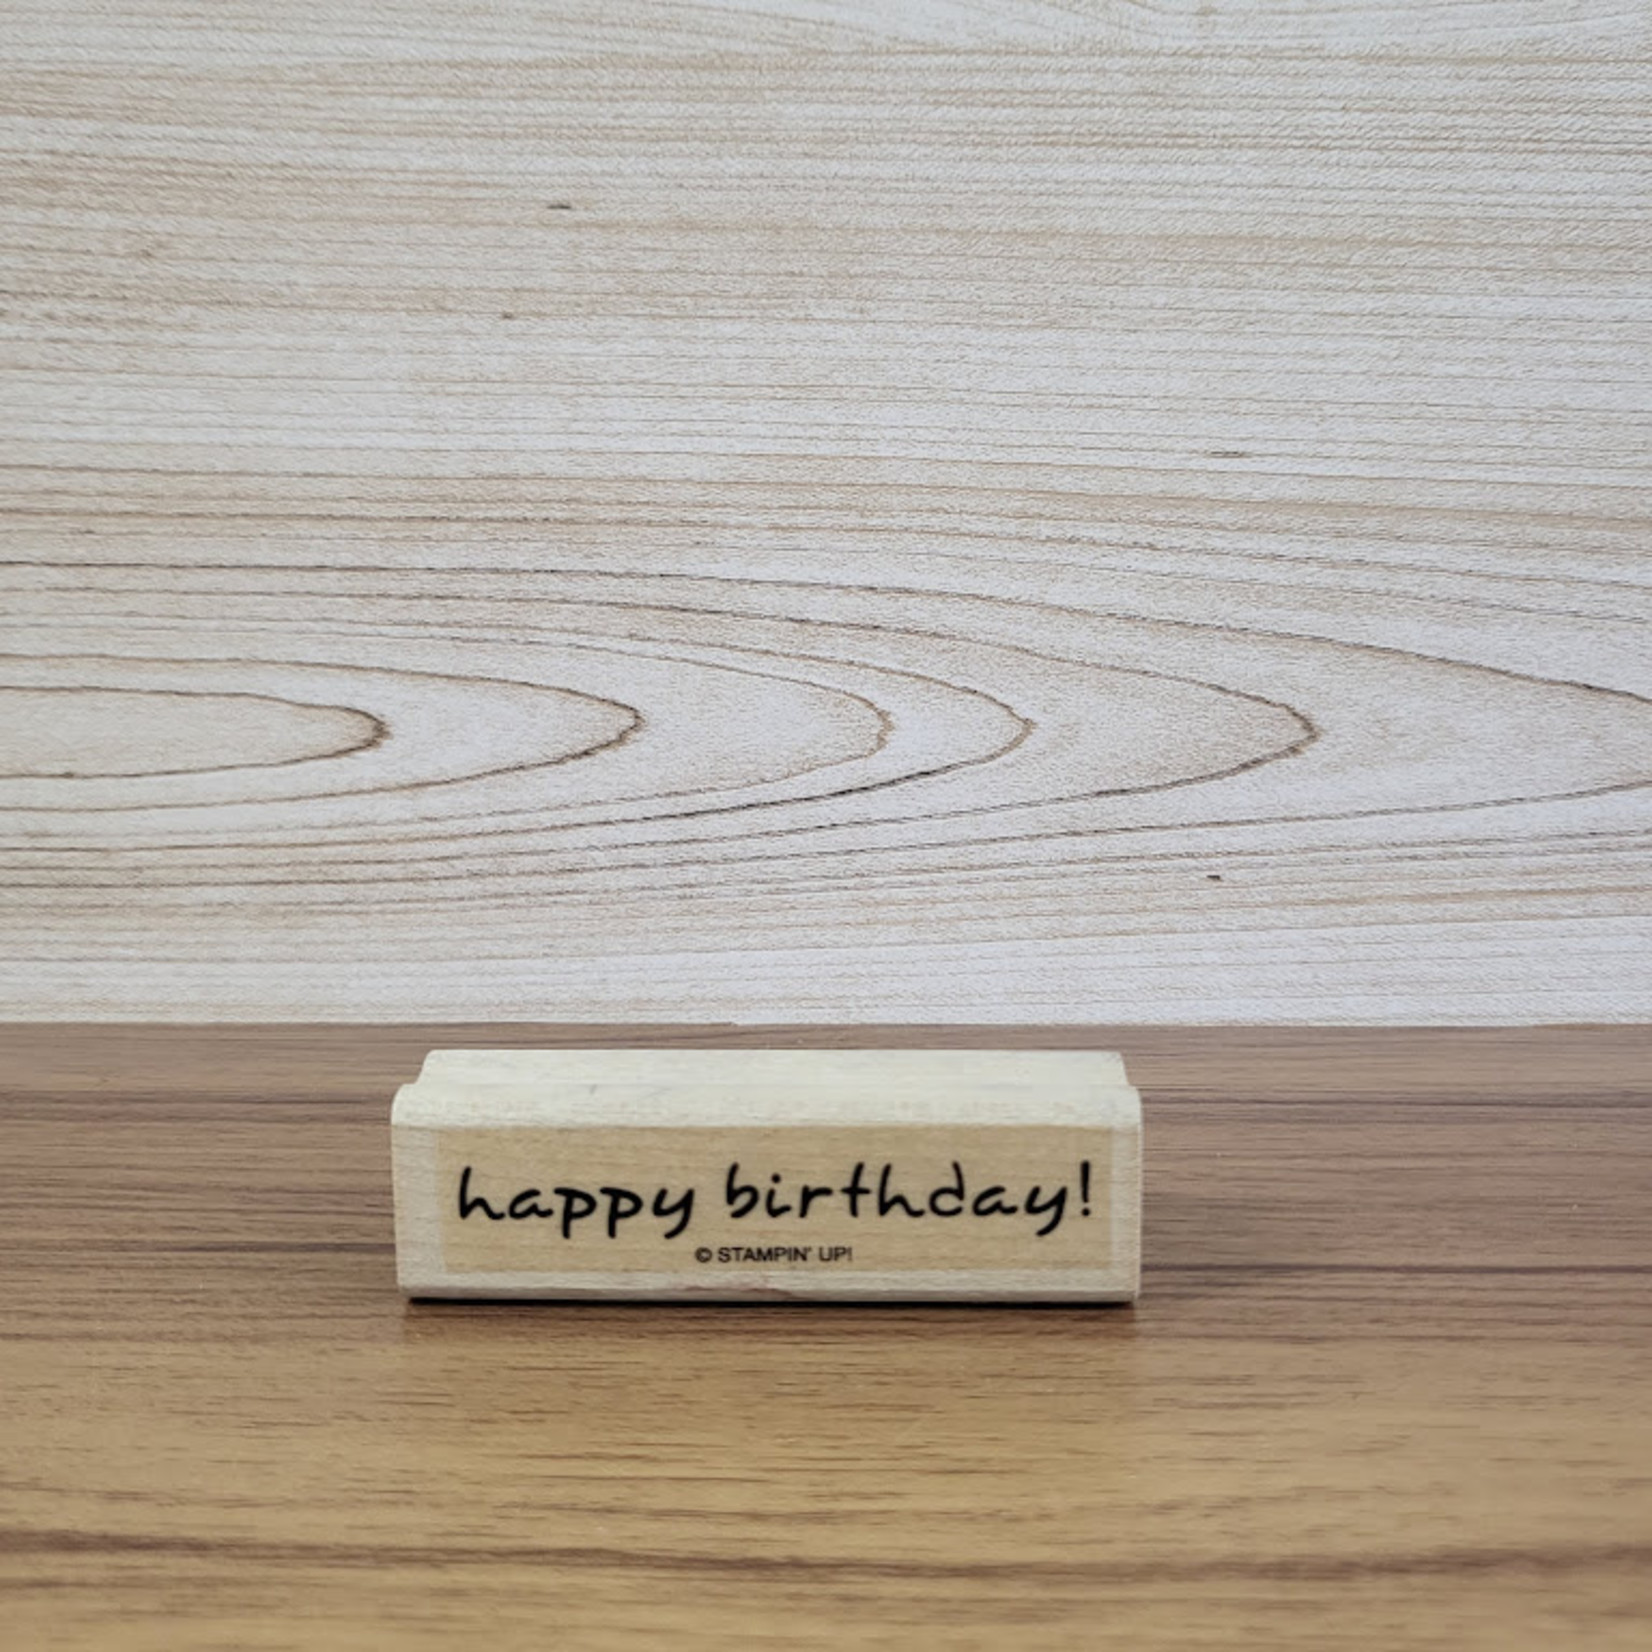 Hero Arts Wooden Stamp - Small happy birthday